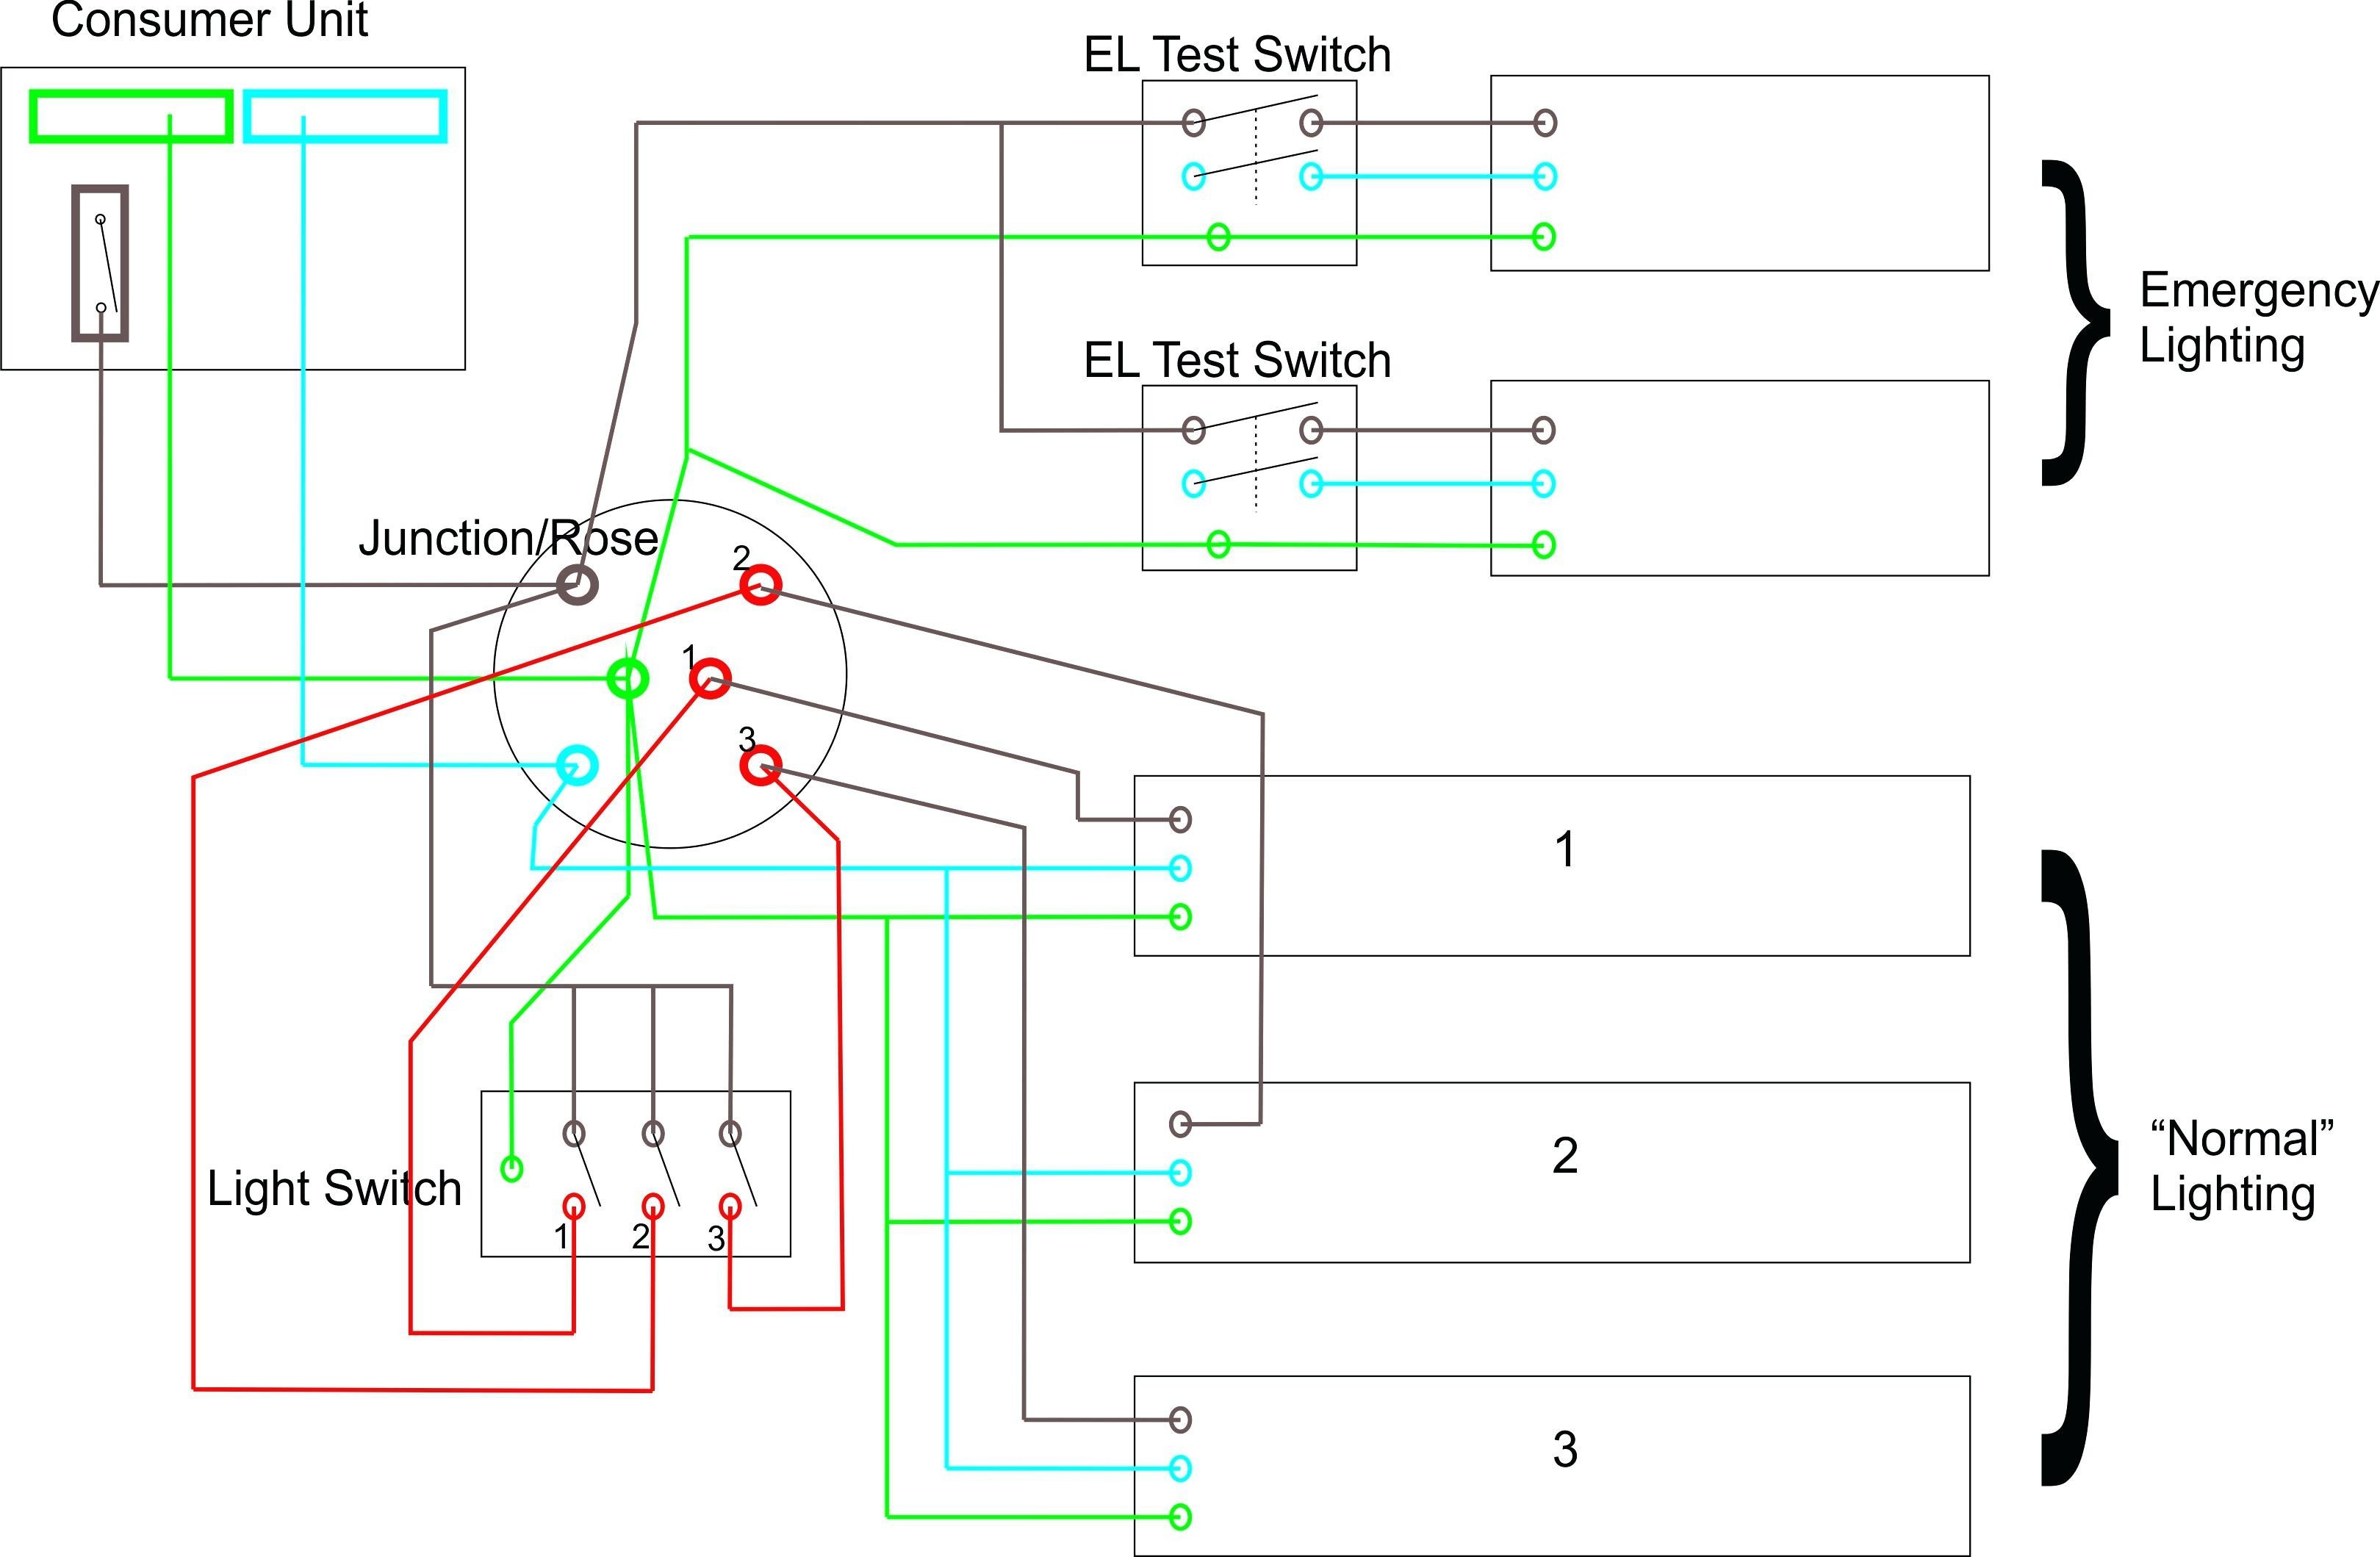 Emergency Light Ings Wiring Diagram Best For